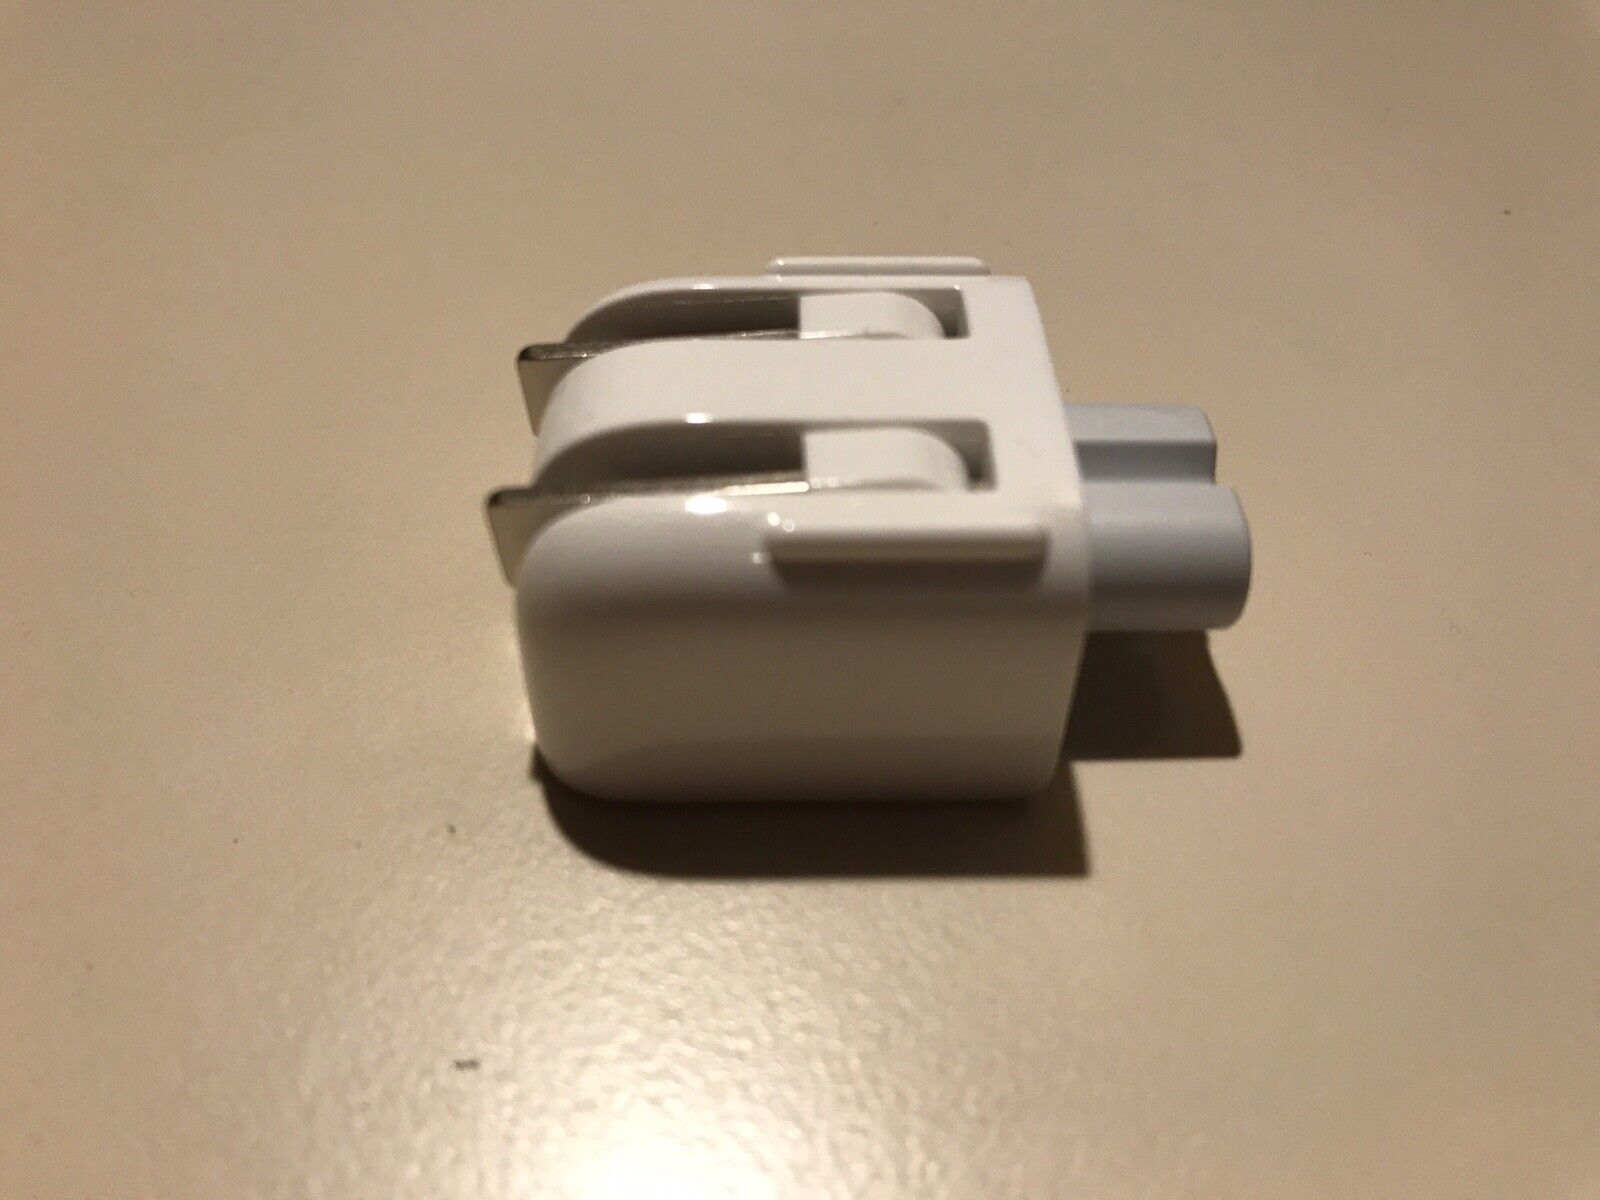 Apple OEM MacBook Charger 2-Prong Plug